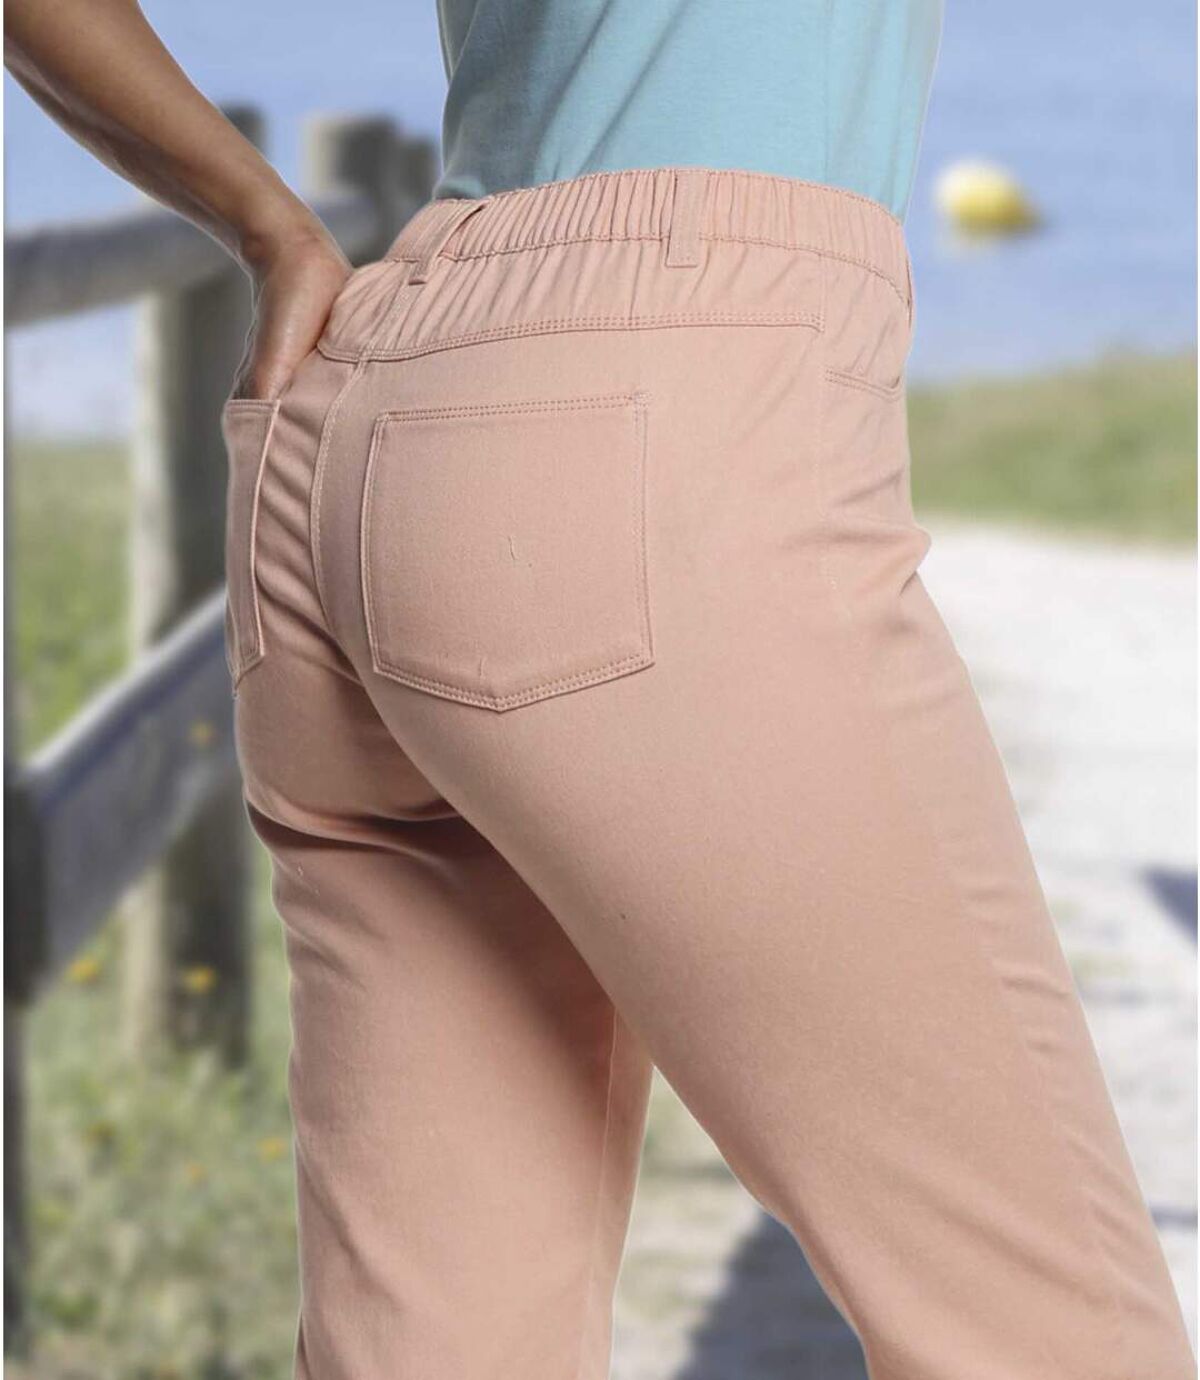 Women's Pale Pink Stretchy Pants Atlas For Men